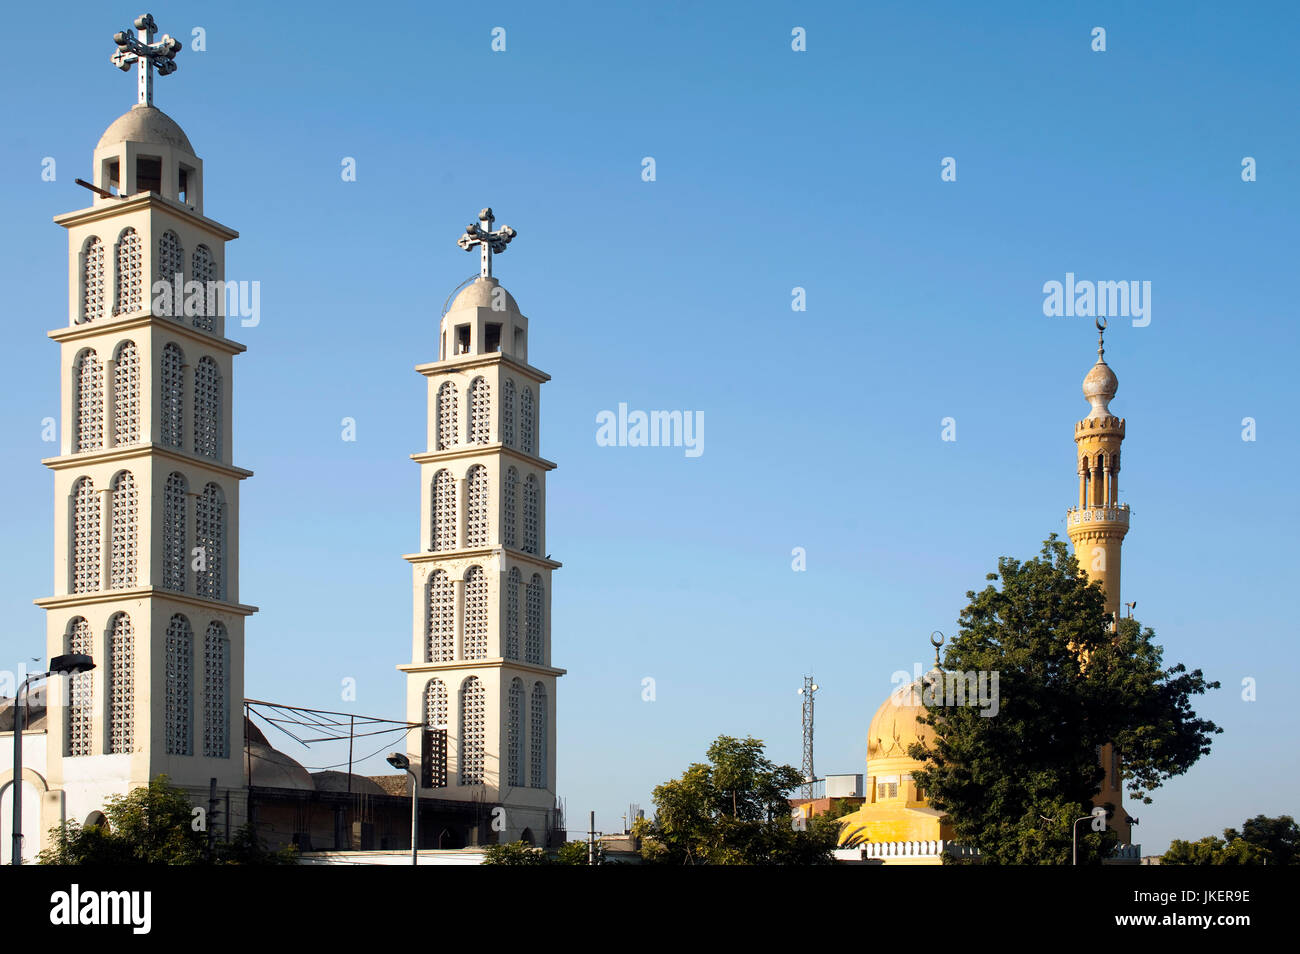 Aegypten, Kom Ombo (Kum Umbu), St. George Koptische Orthodoxe Kirche und ein Minarett Stockfoto